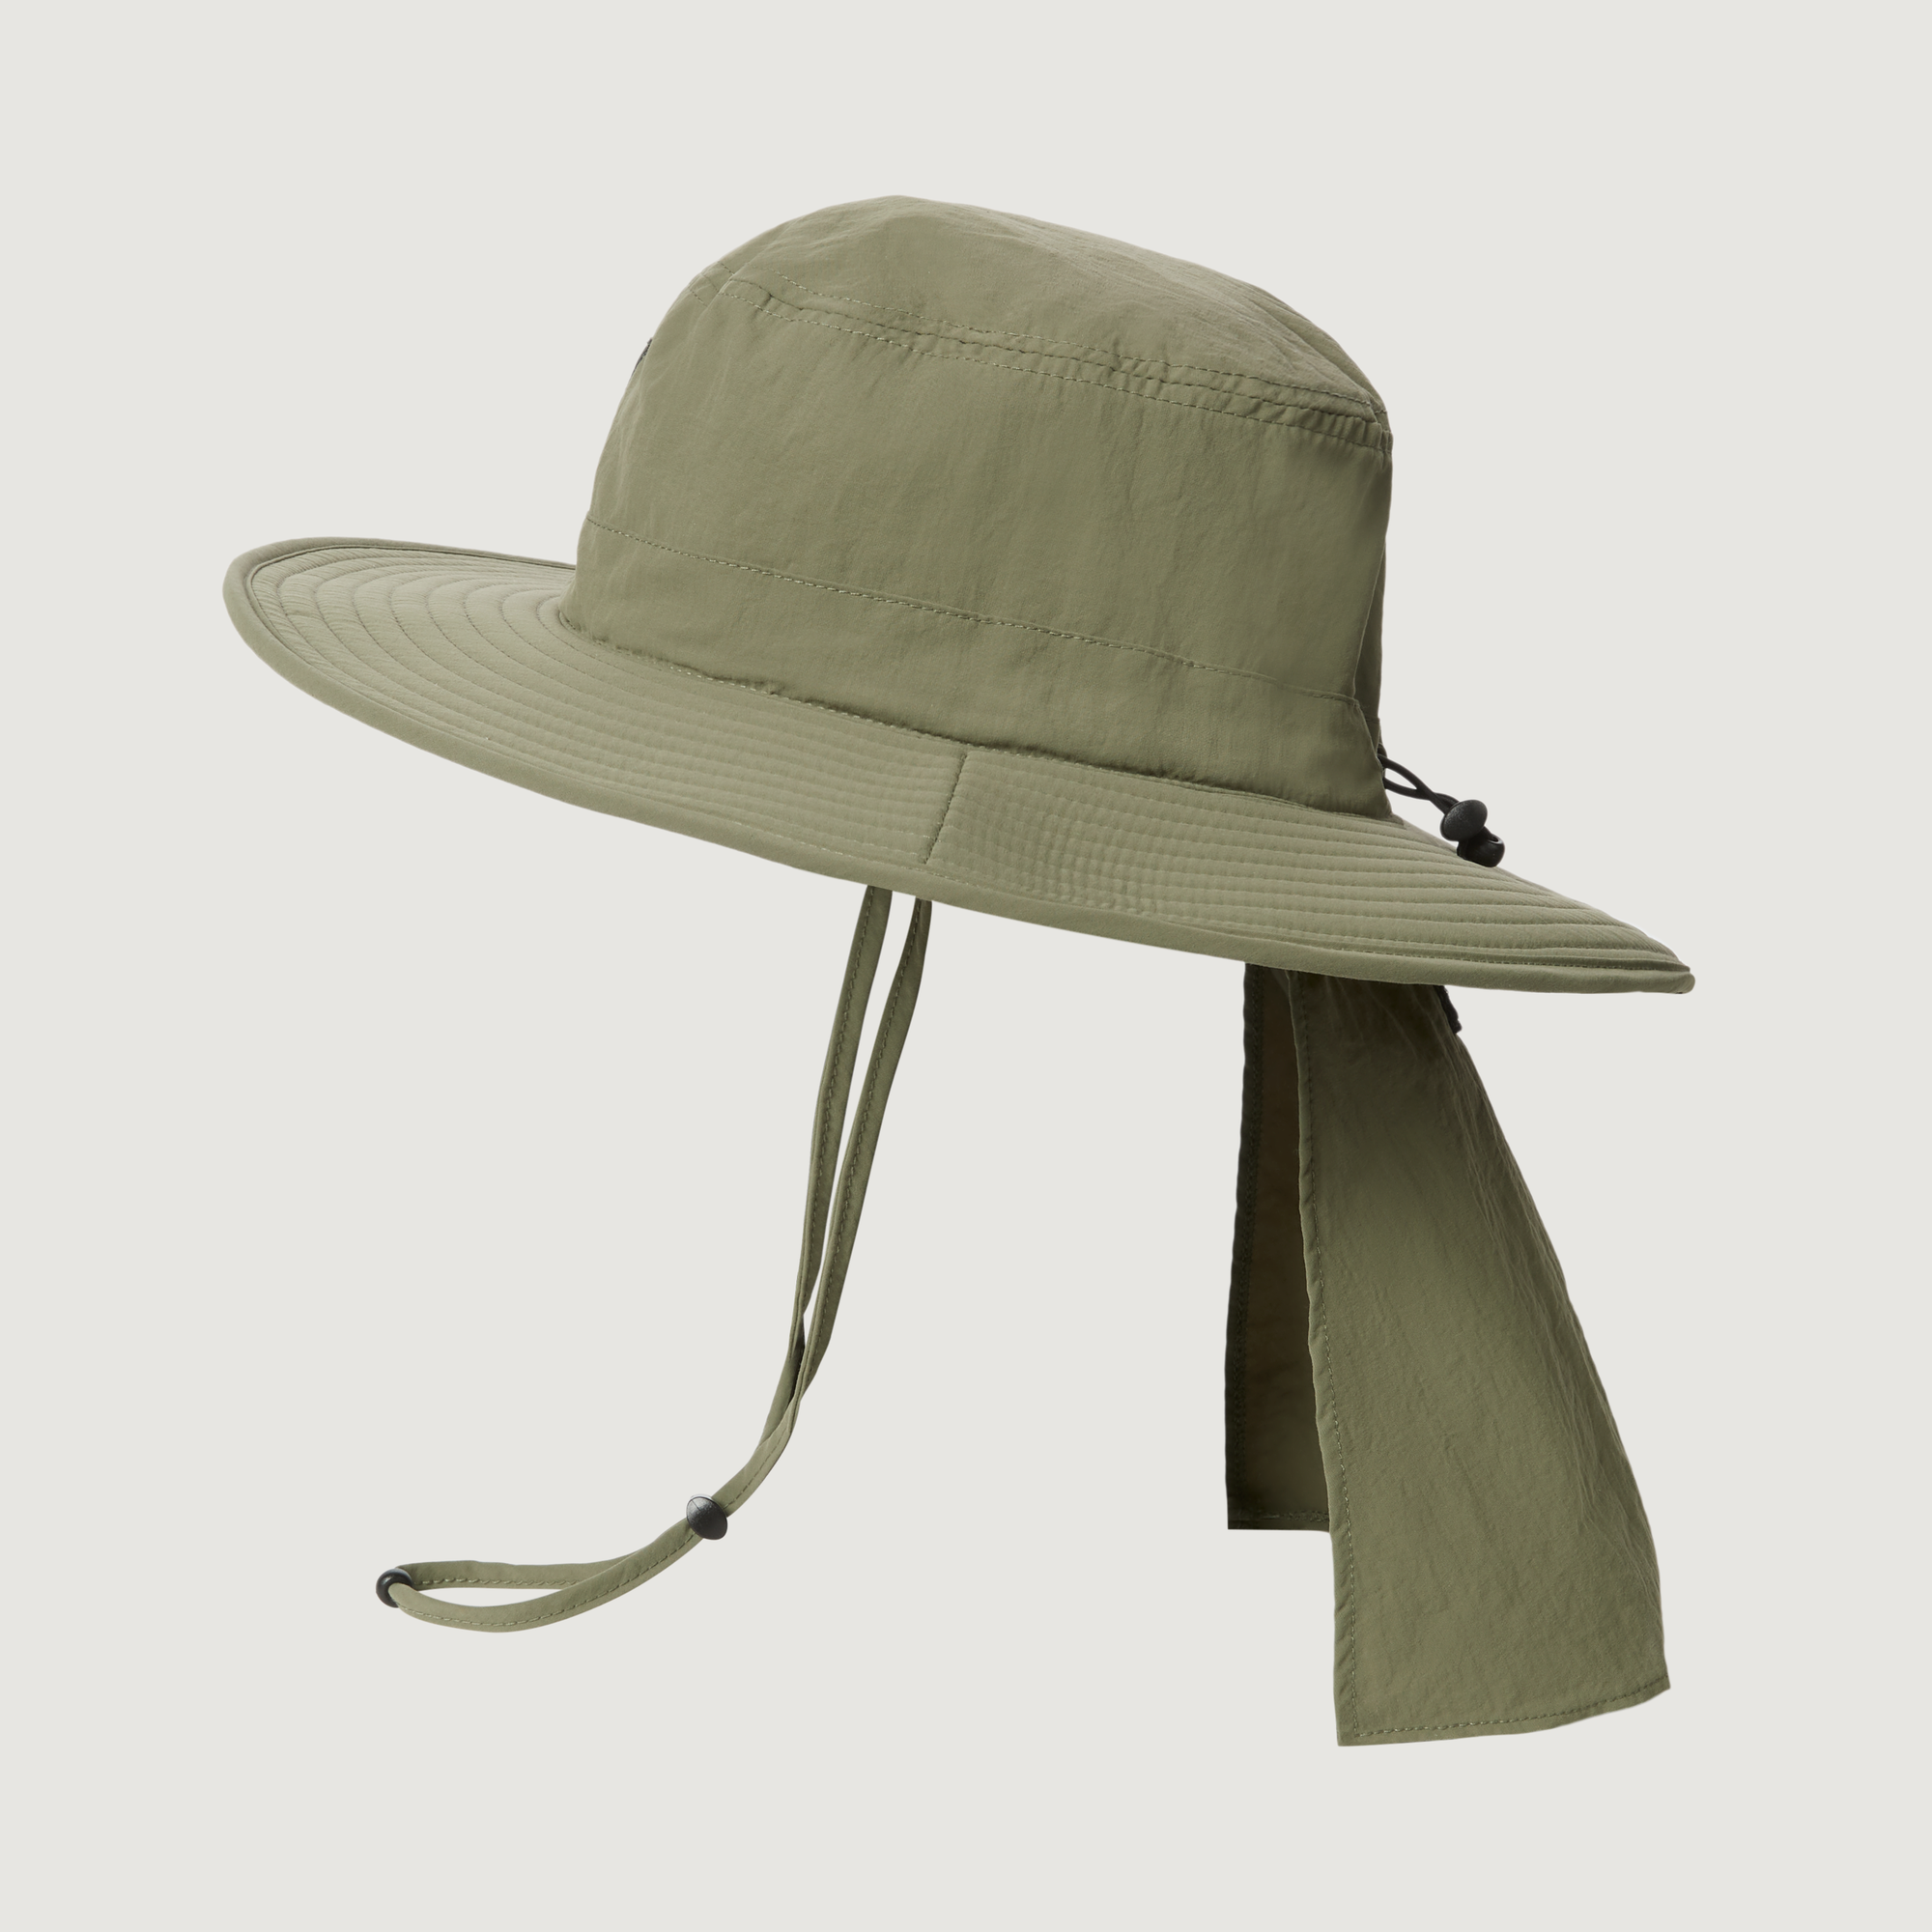 EVRY-Day UPF 50+ Wide Brim Hat | KATHMANDU | Portwest - The Outdoor Shop